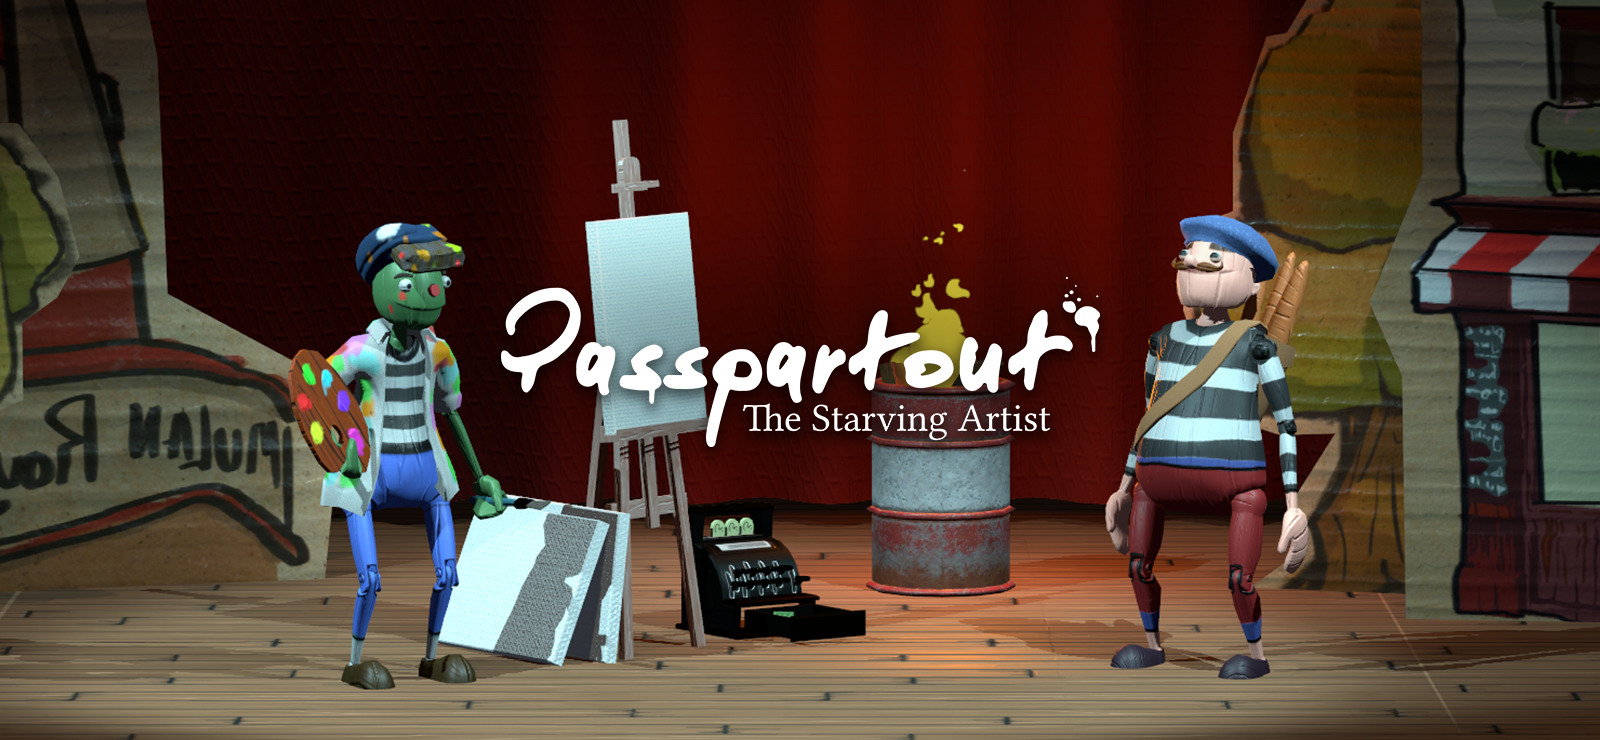 passepartout the starving artist free